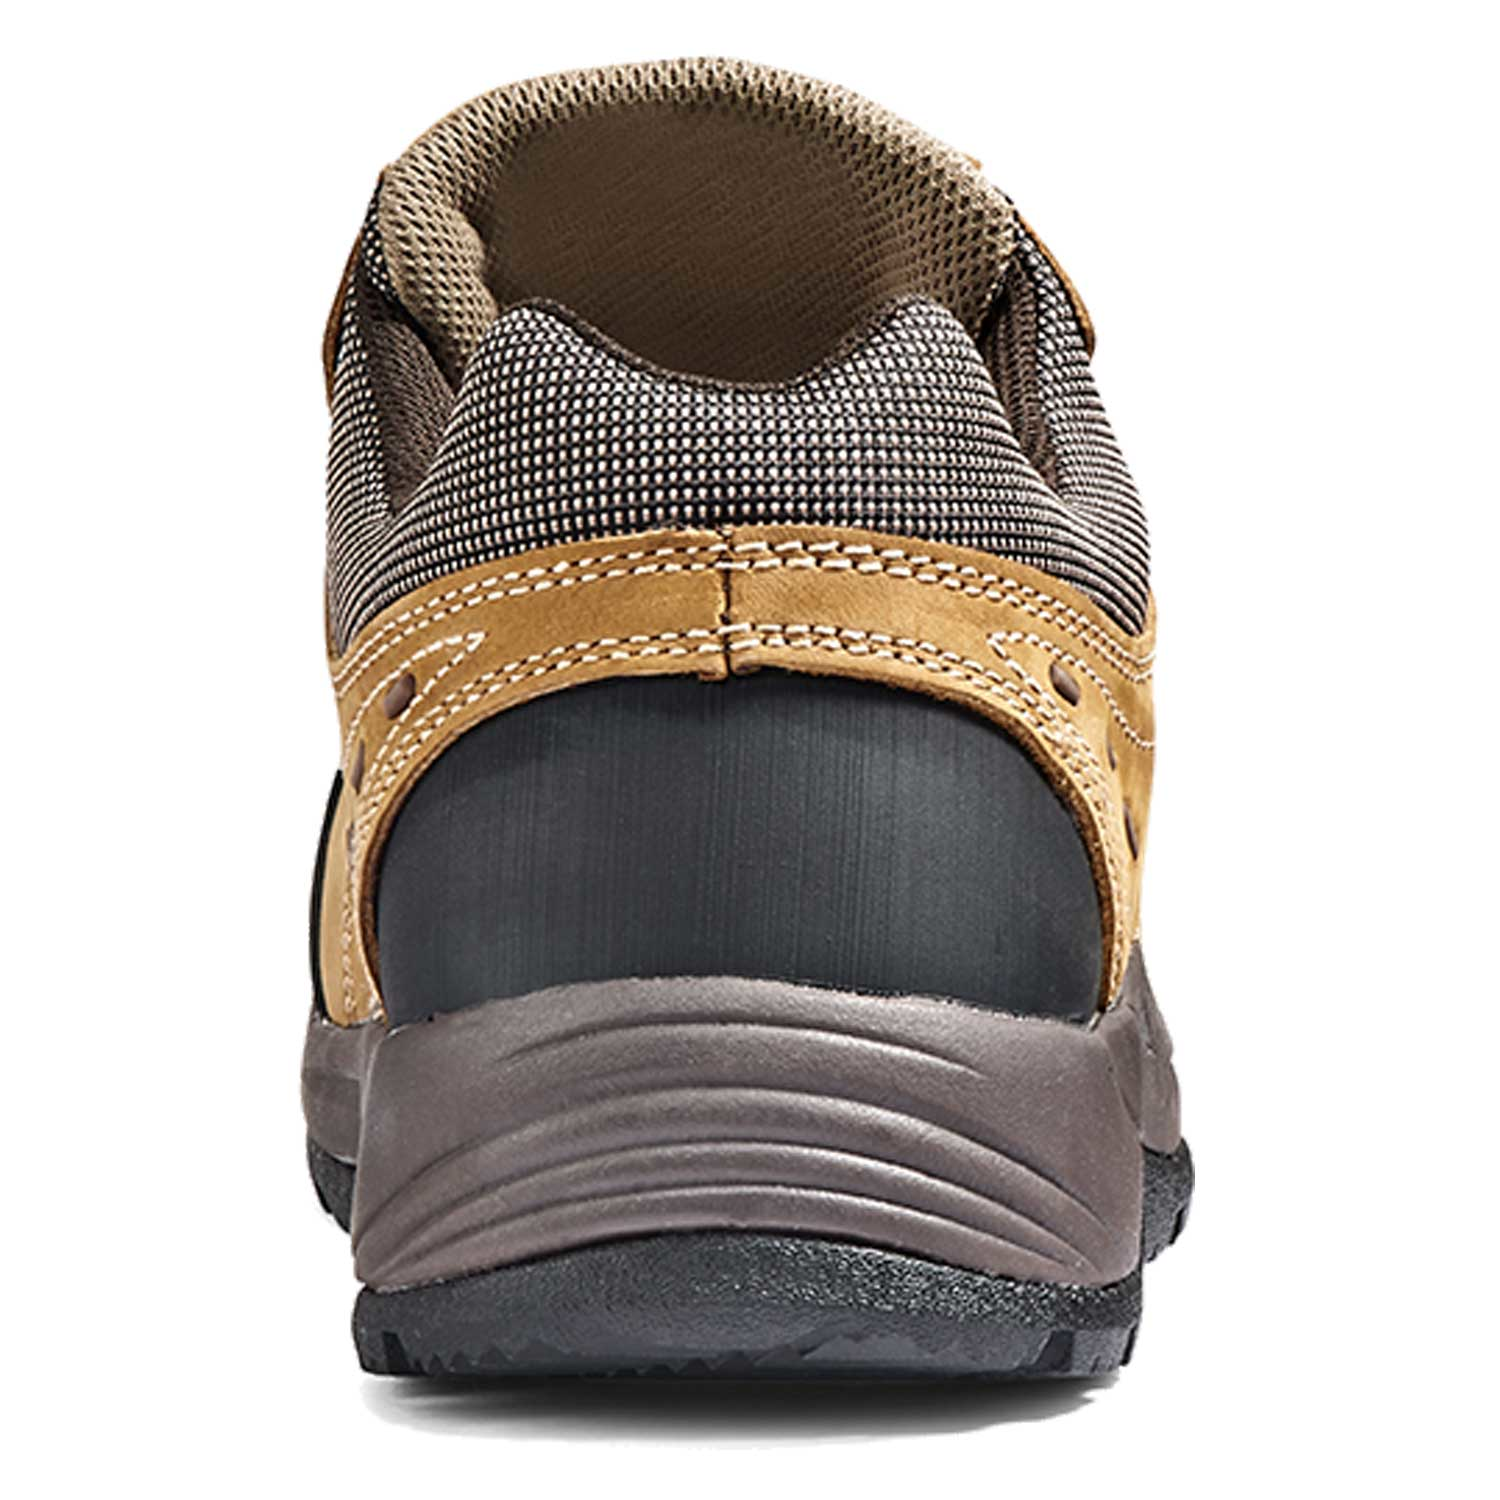 Kodiak Swift Trail Men's Composite Toe Athletic Work Shoes - Grey